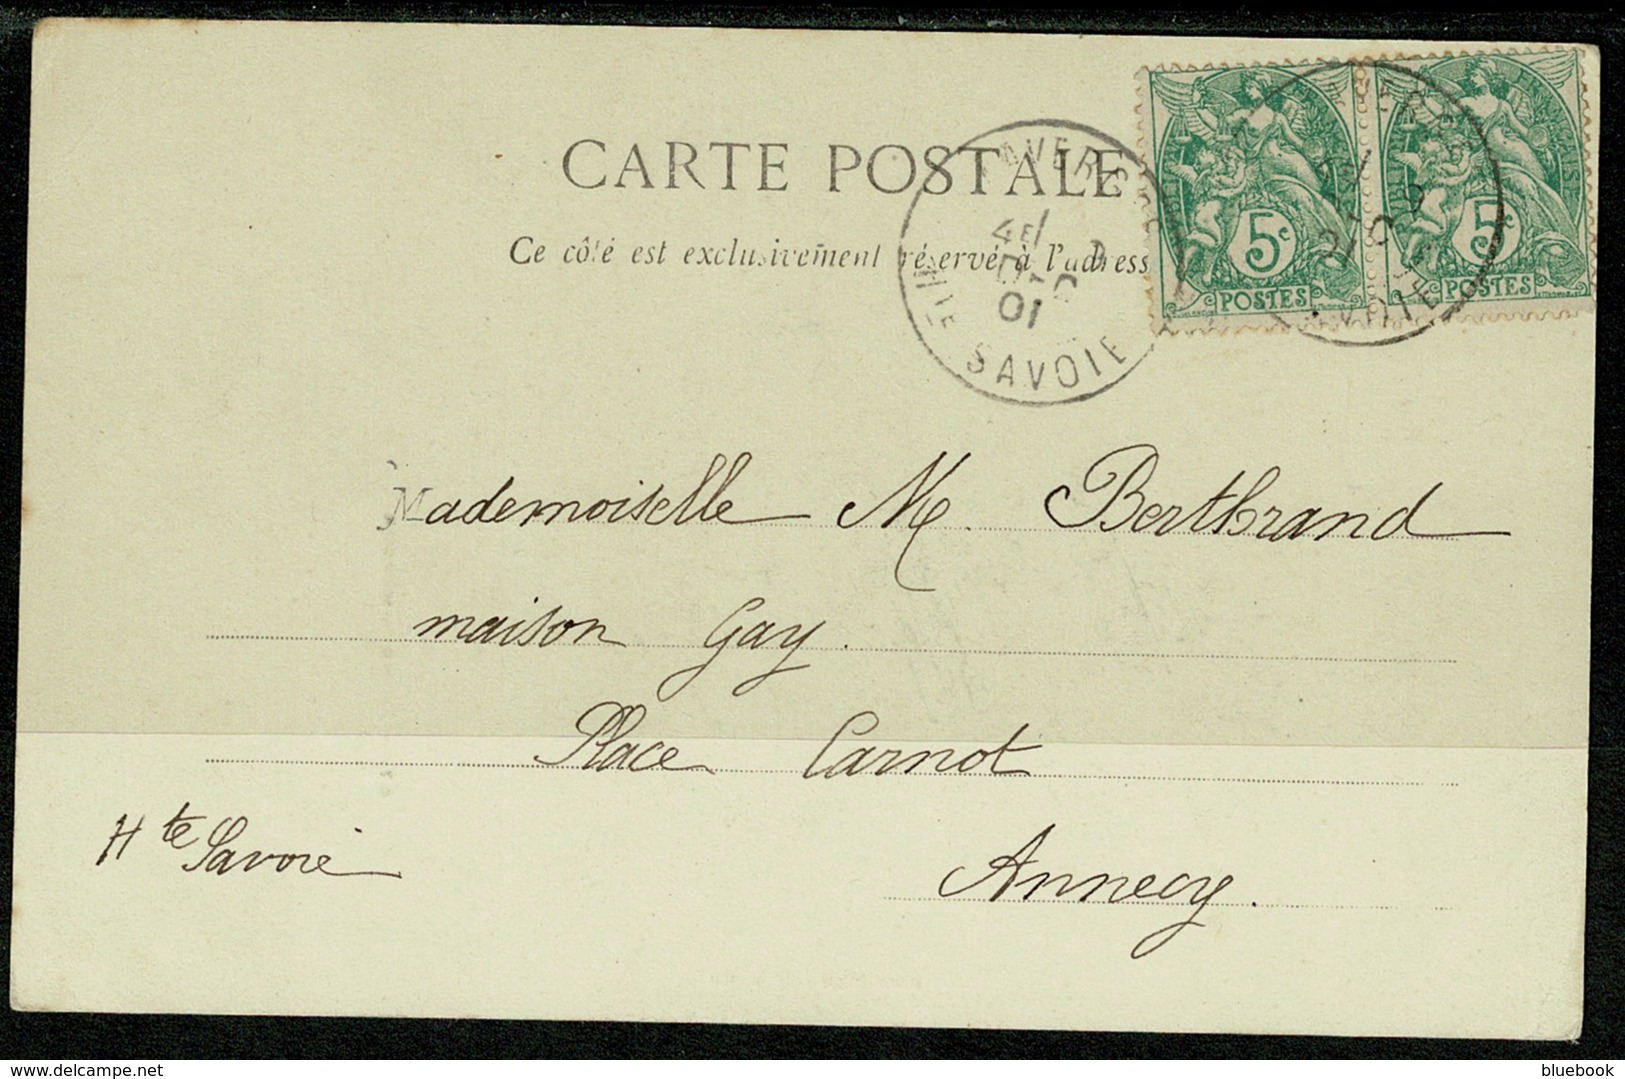 Ref 1243 - 1901 Ethnic Postcard - Chimney Sweep - France 10c Internal Rate - Europe